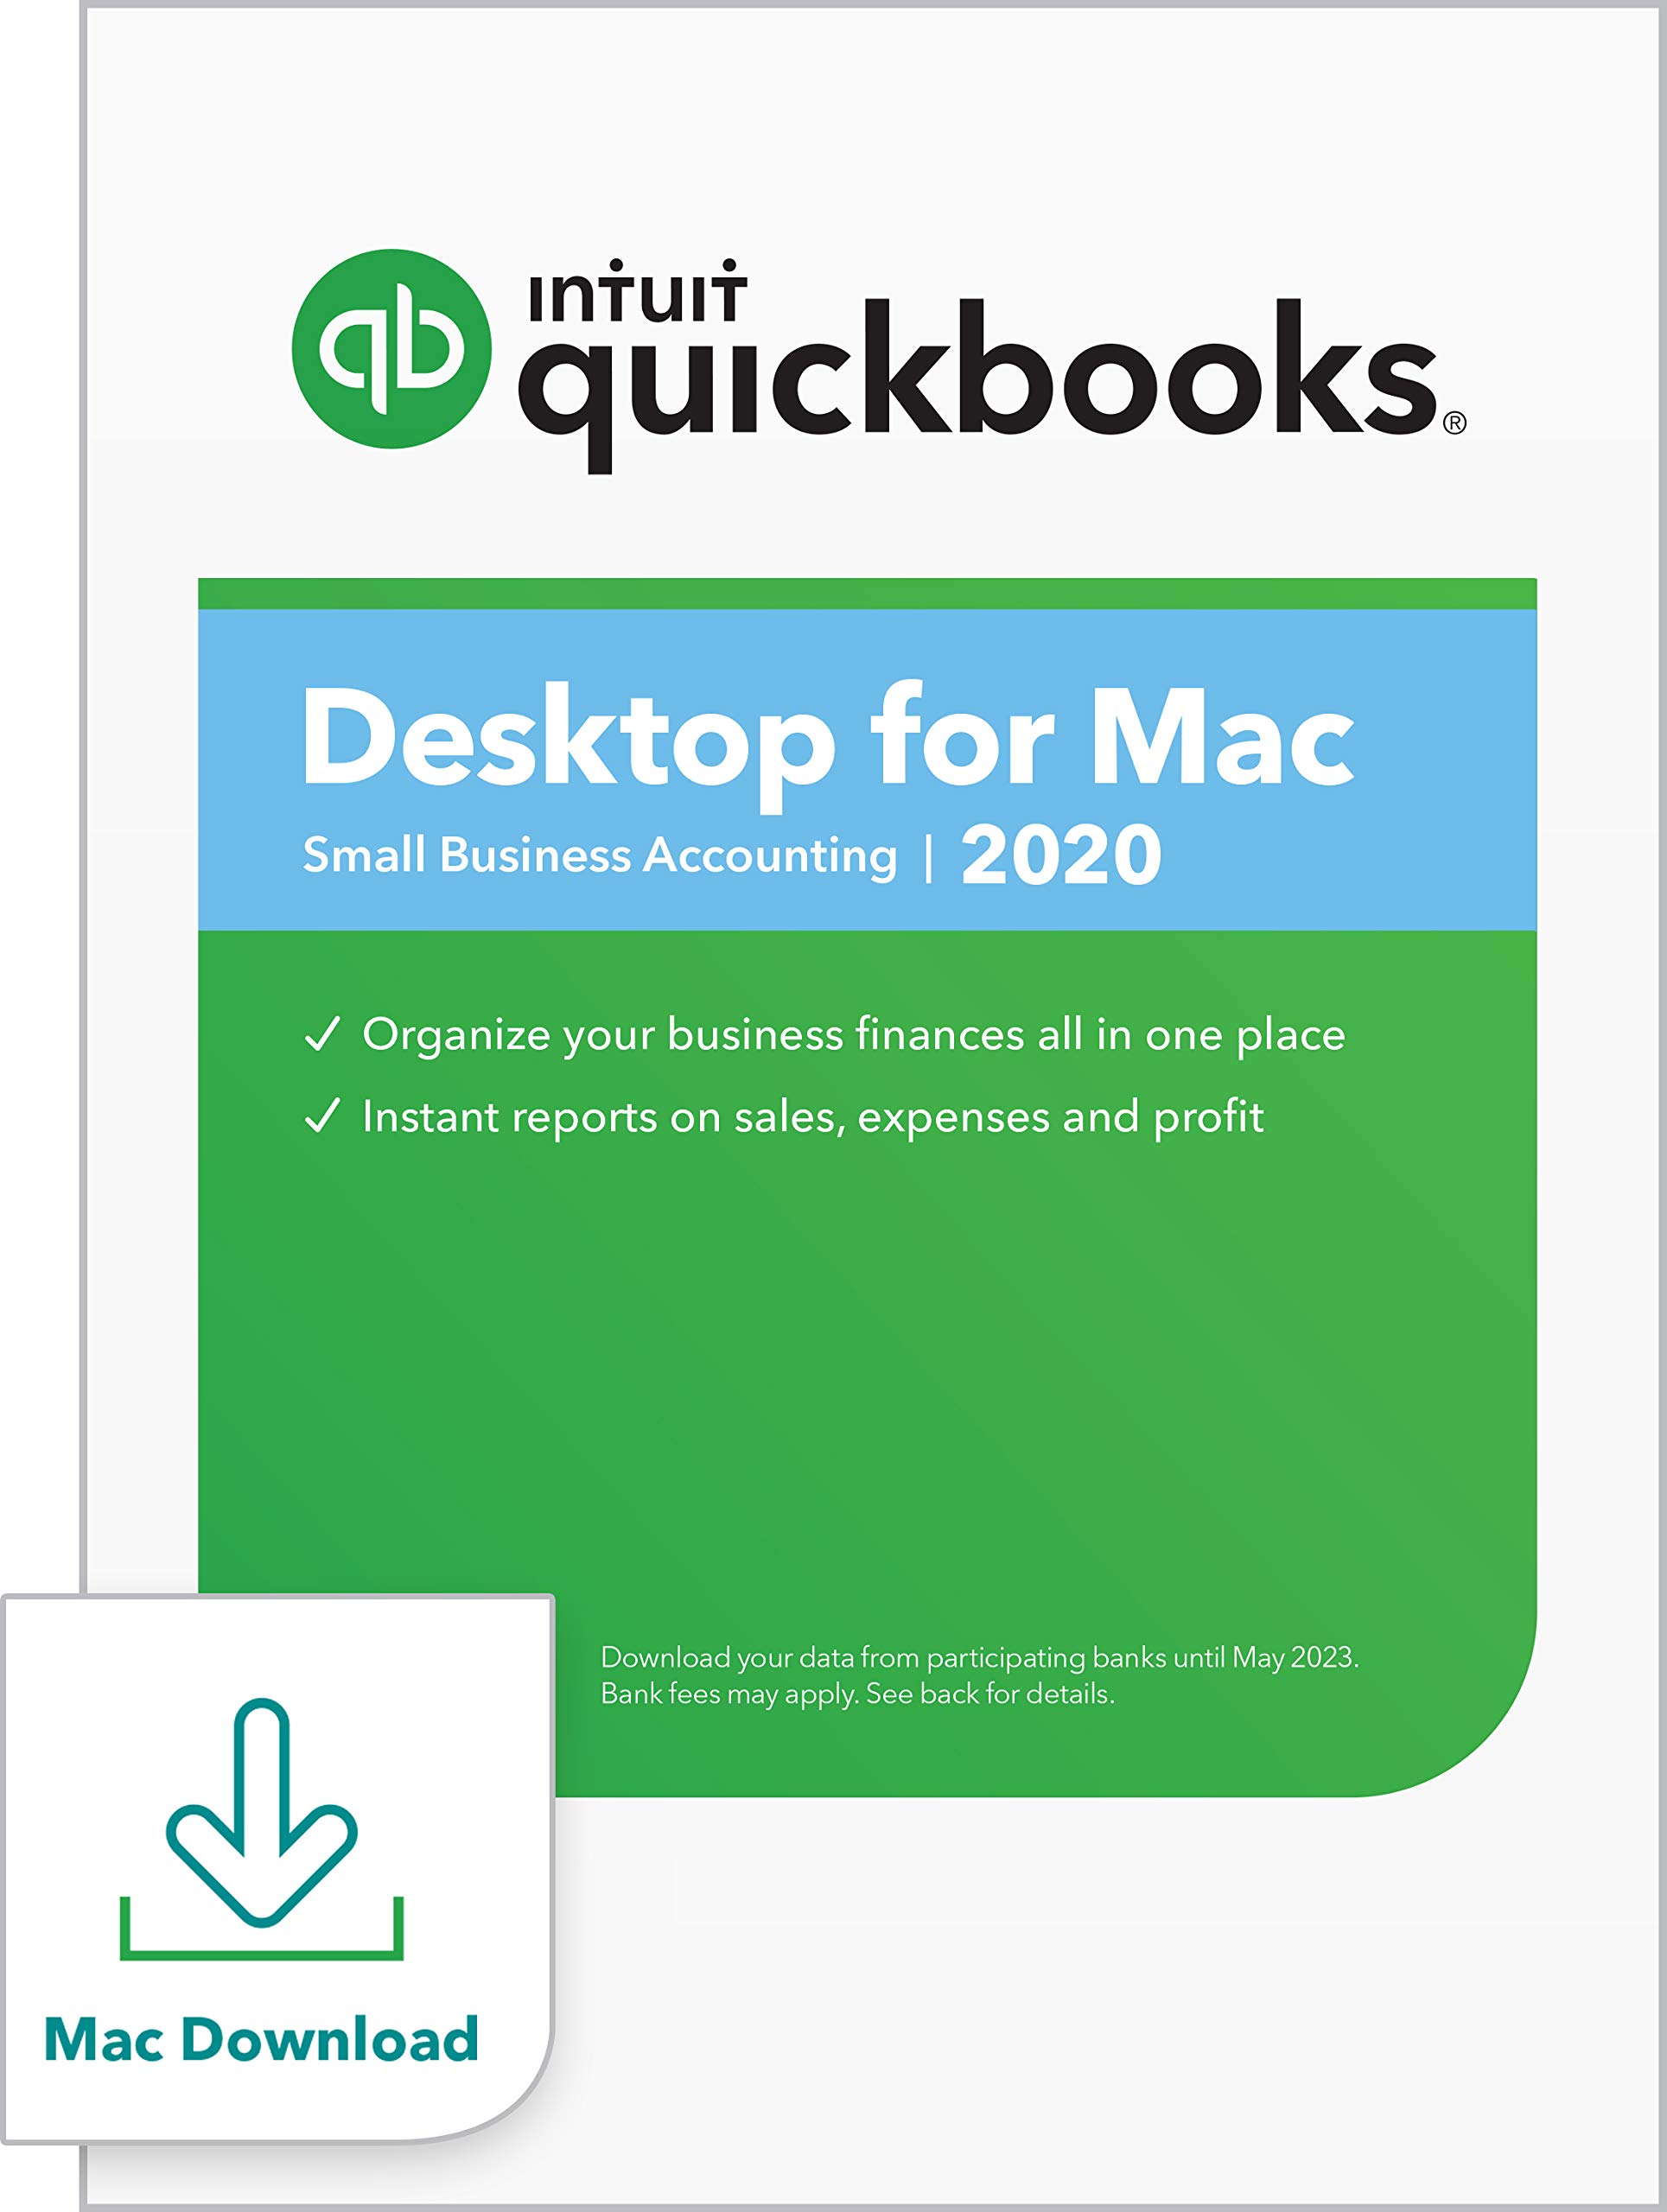 quickbooks for mac closing date